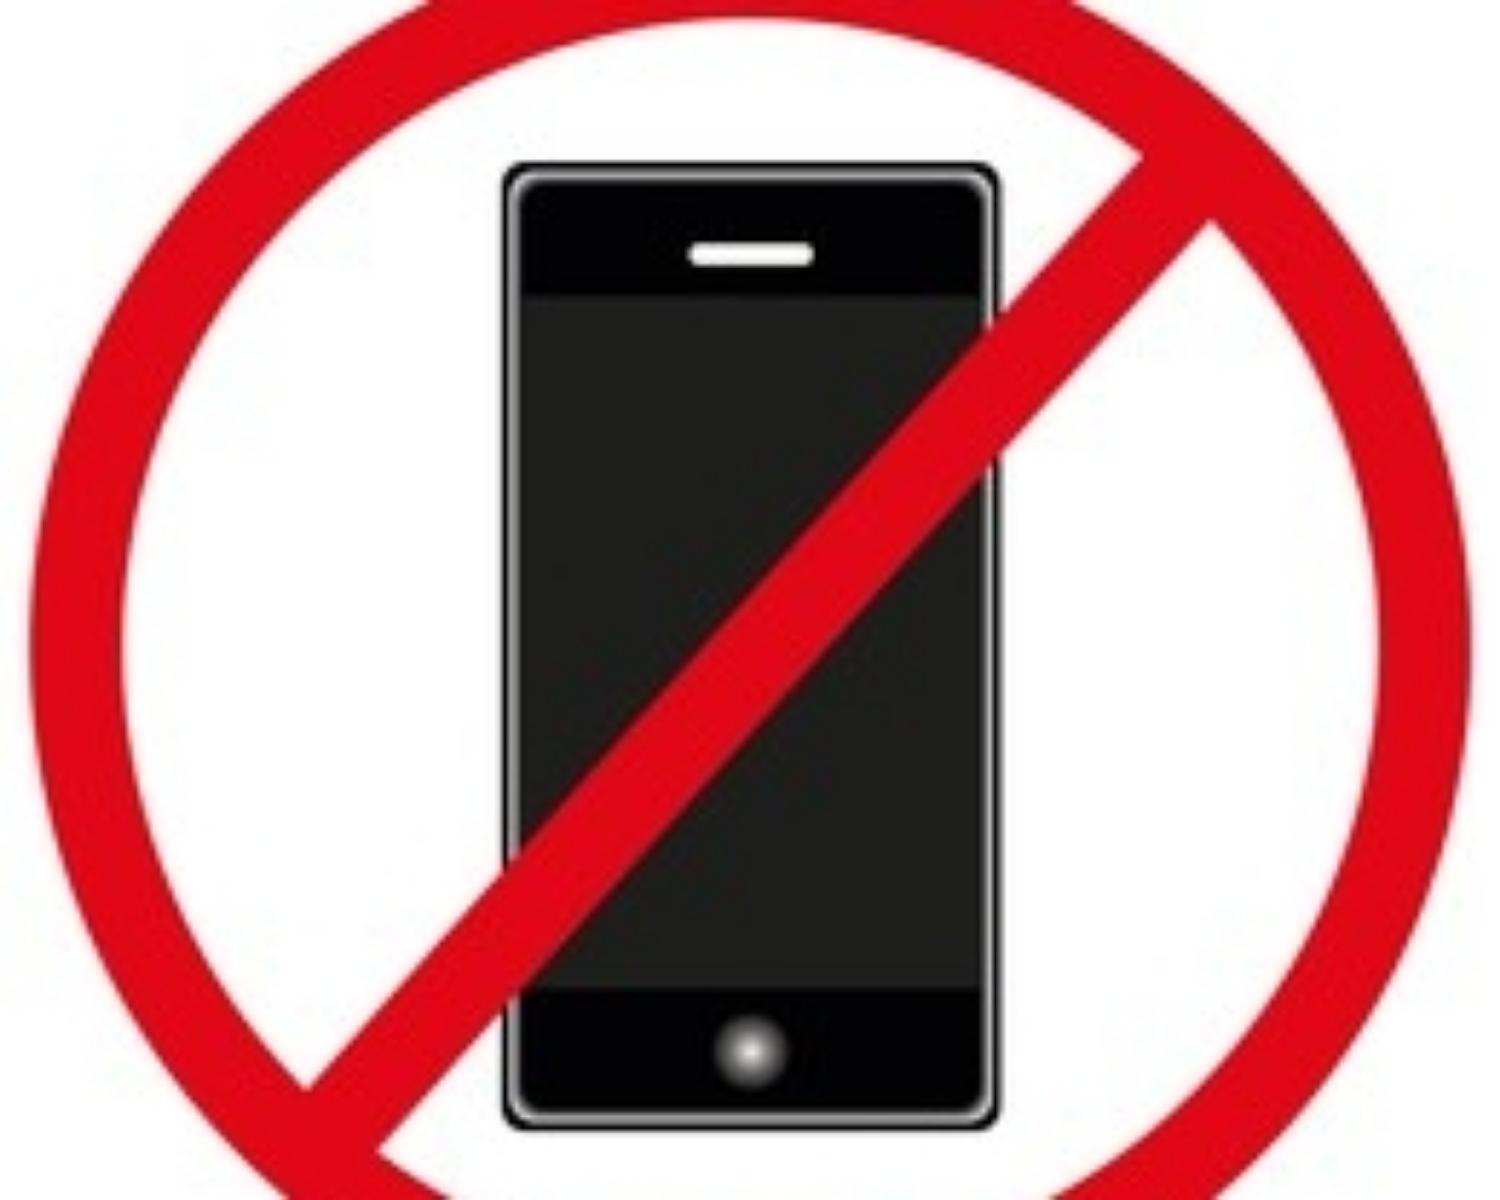 5. Avoid your phone